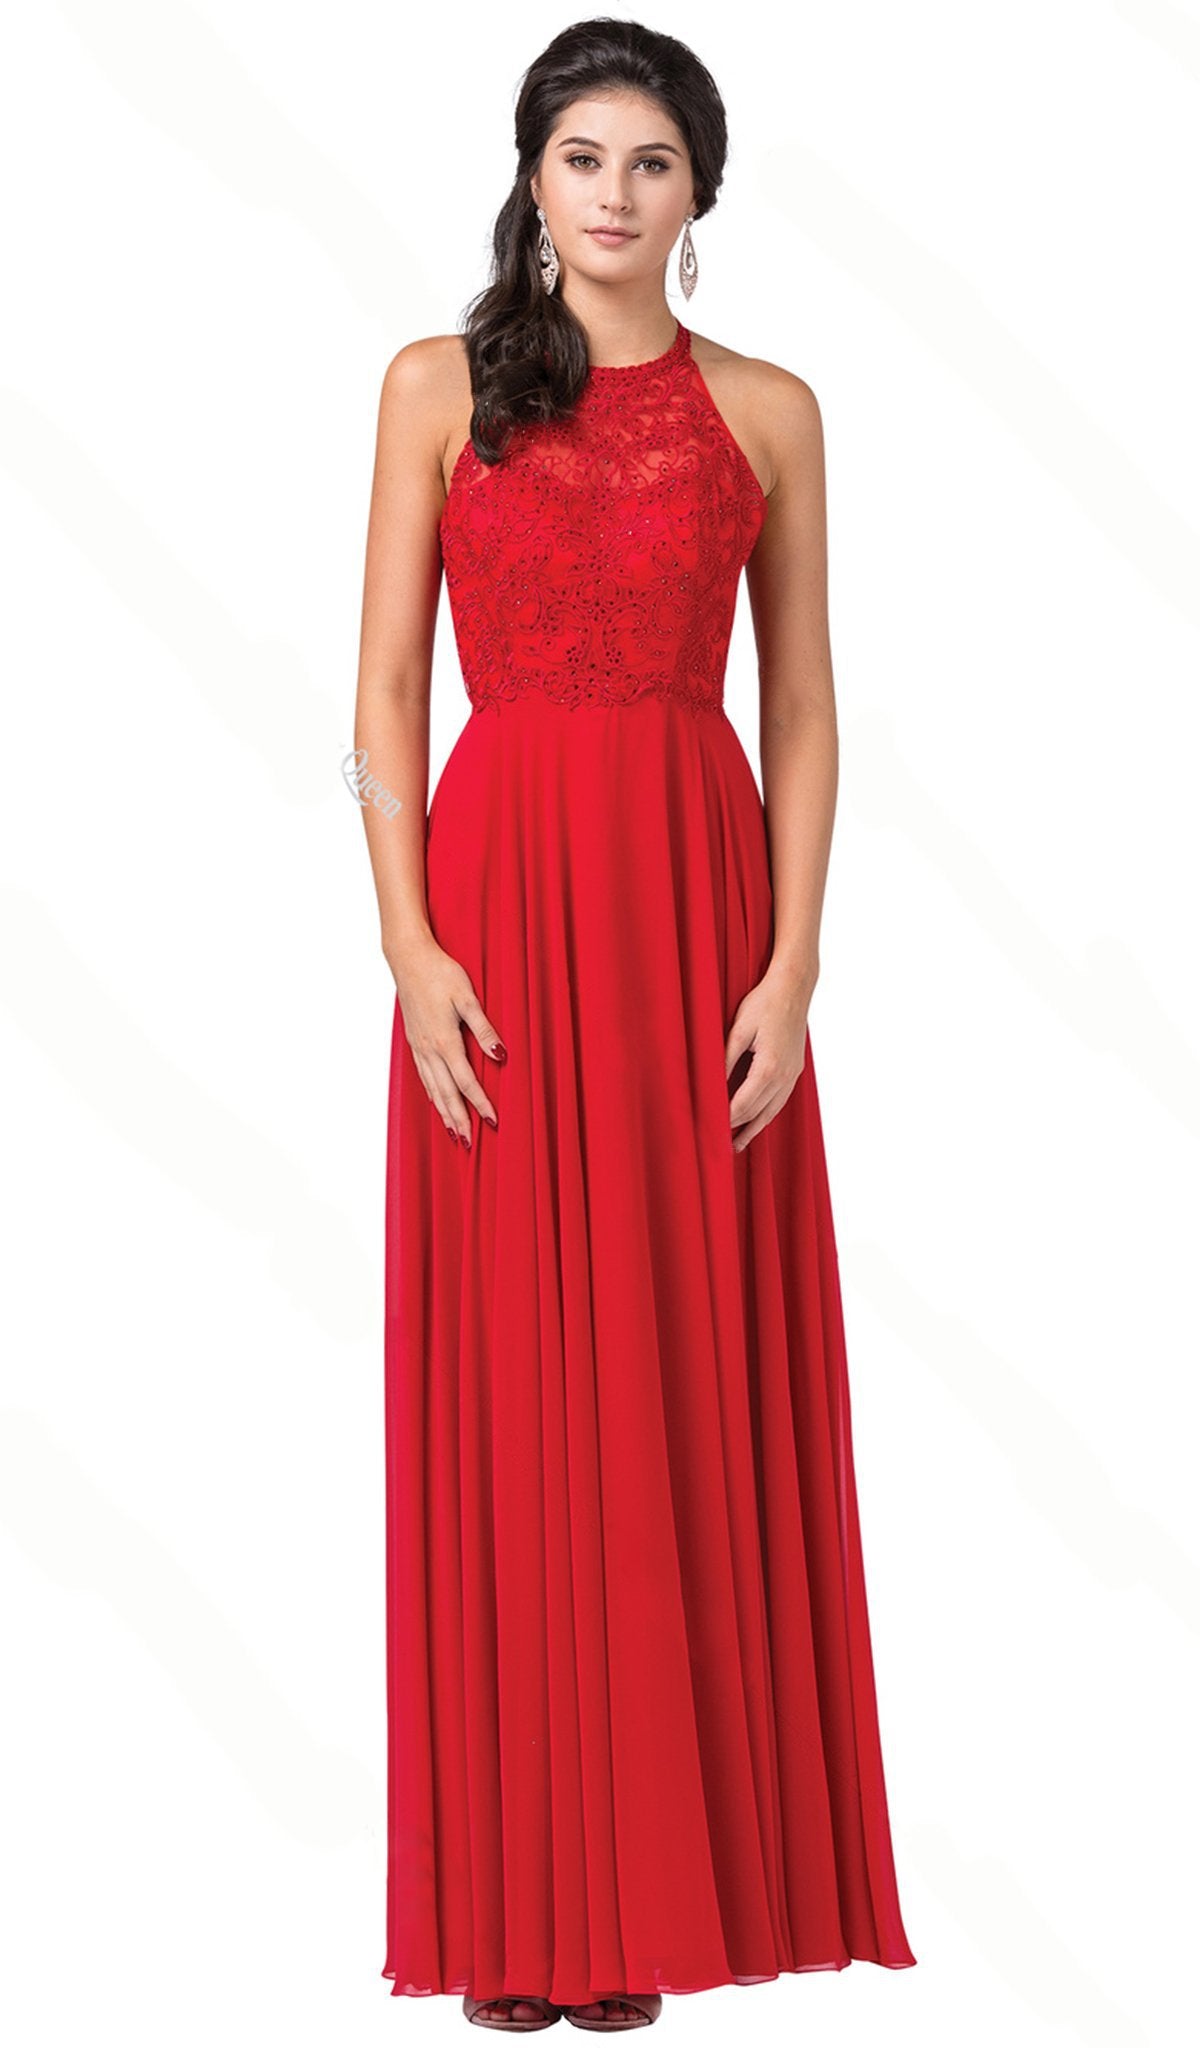 Dancing Queen - 2678 Beaded Halter A-Line Prom Dress In Red